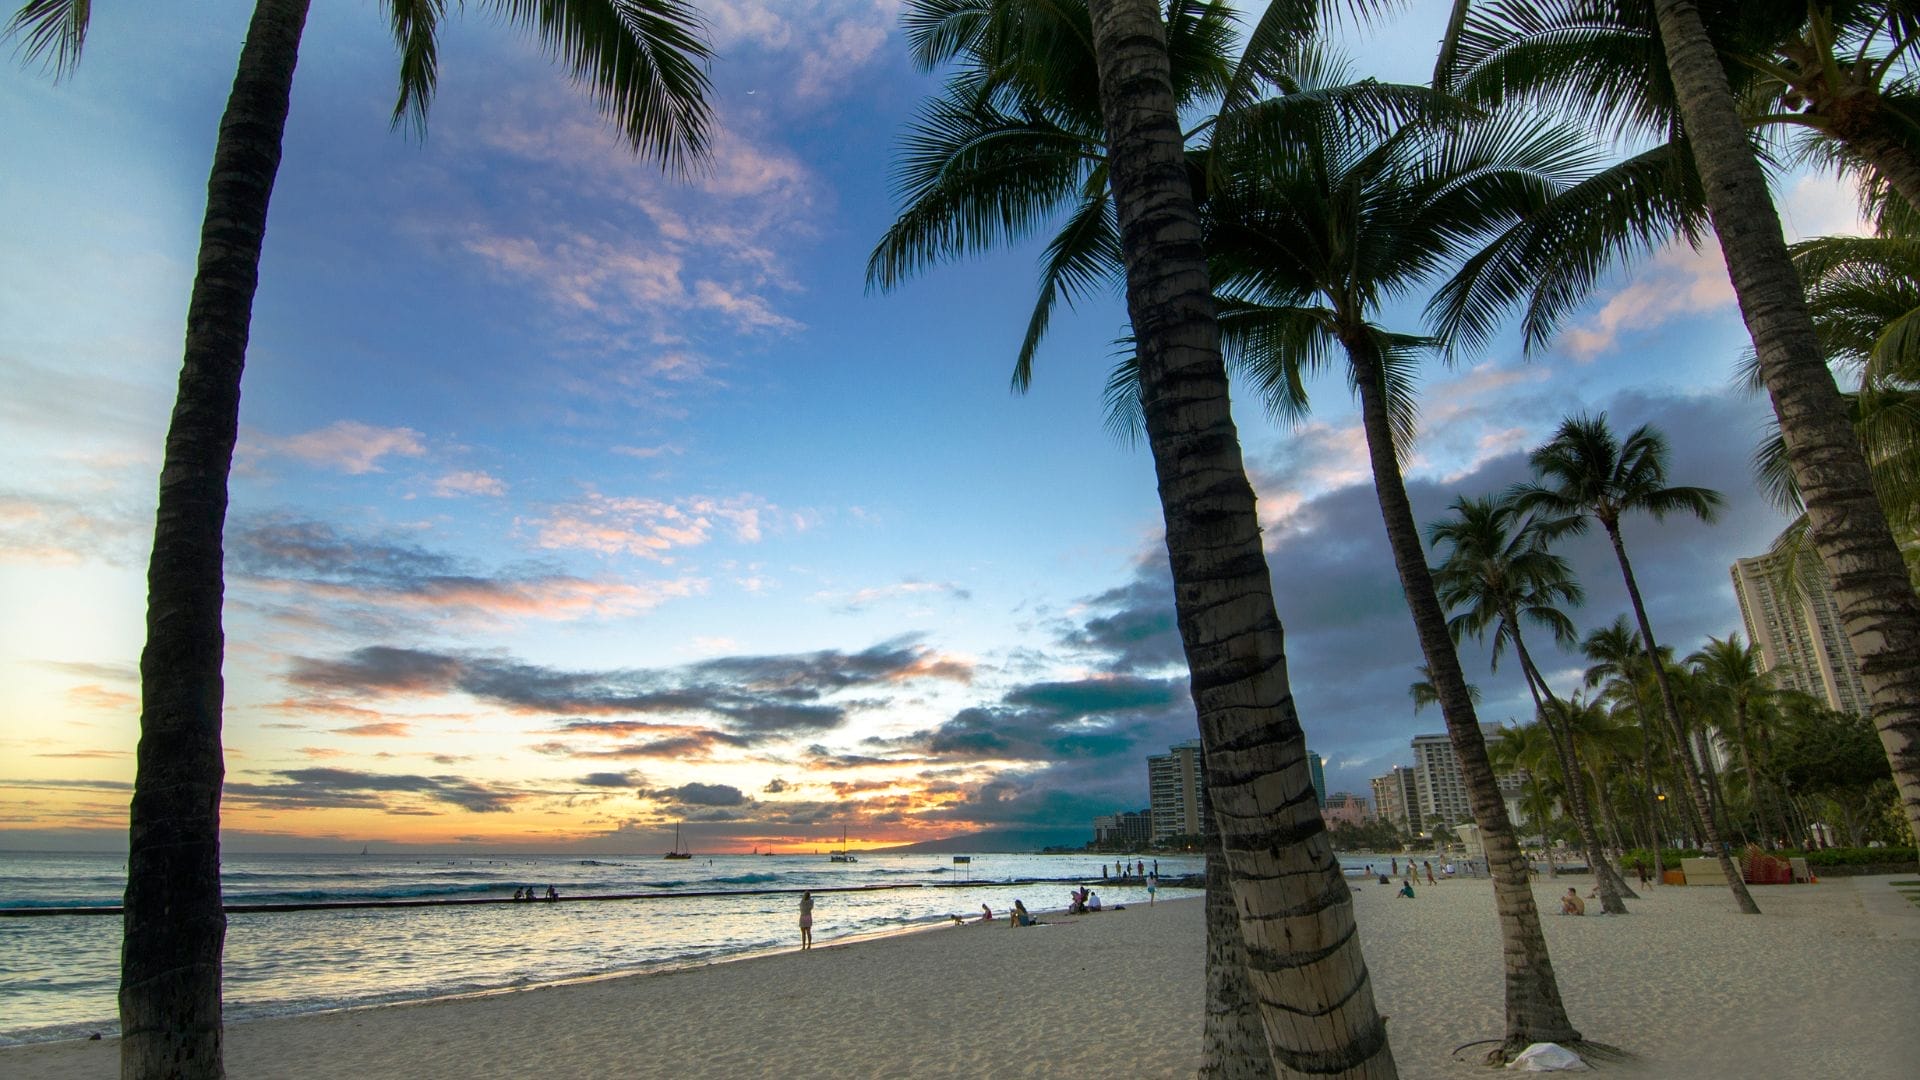 Waikiki Beach opening times at sunset